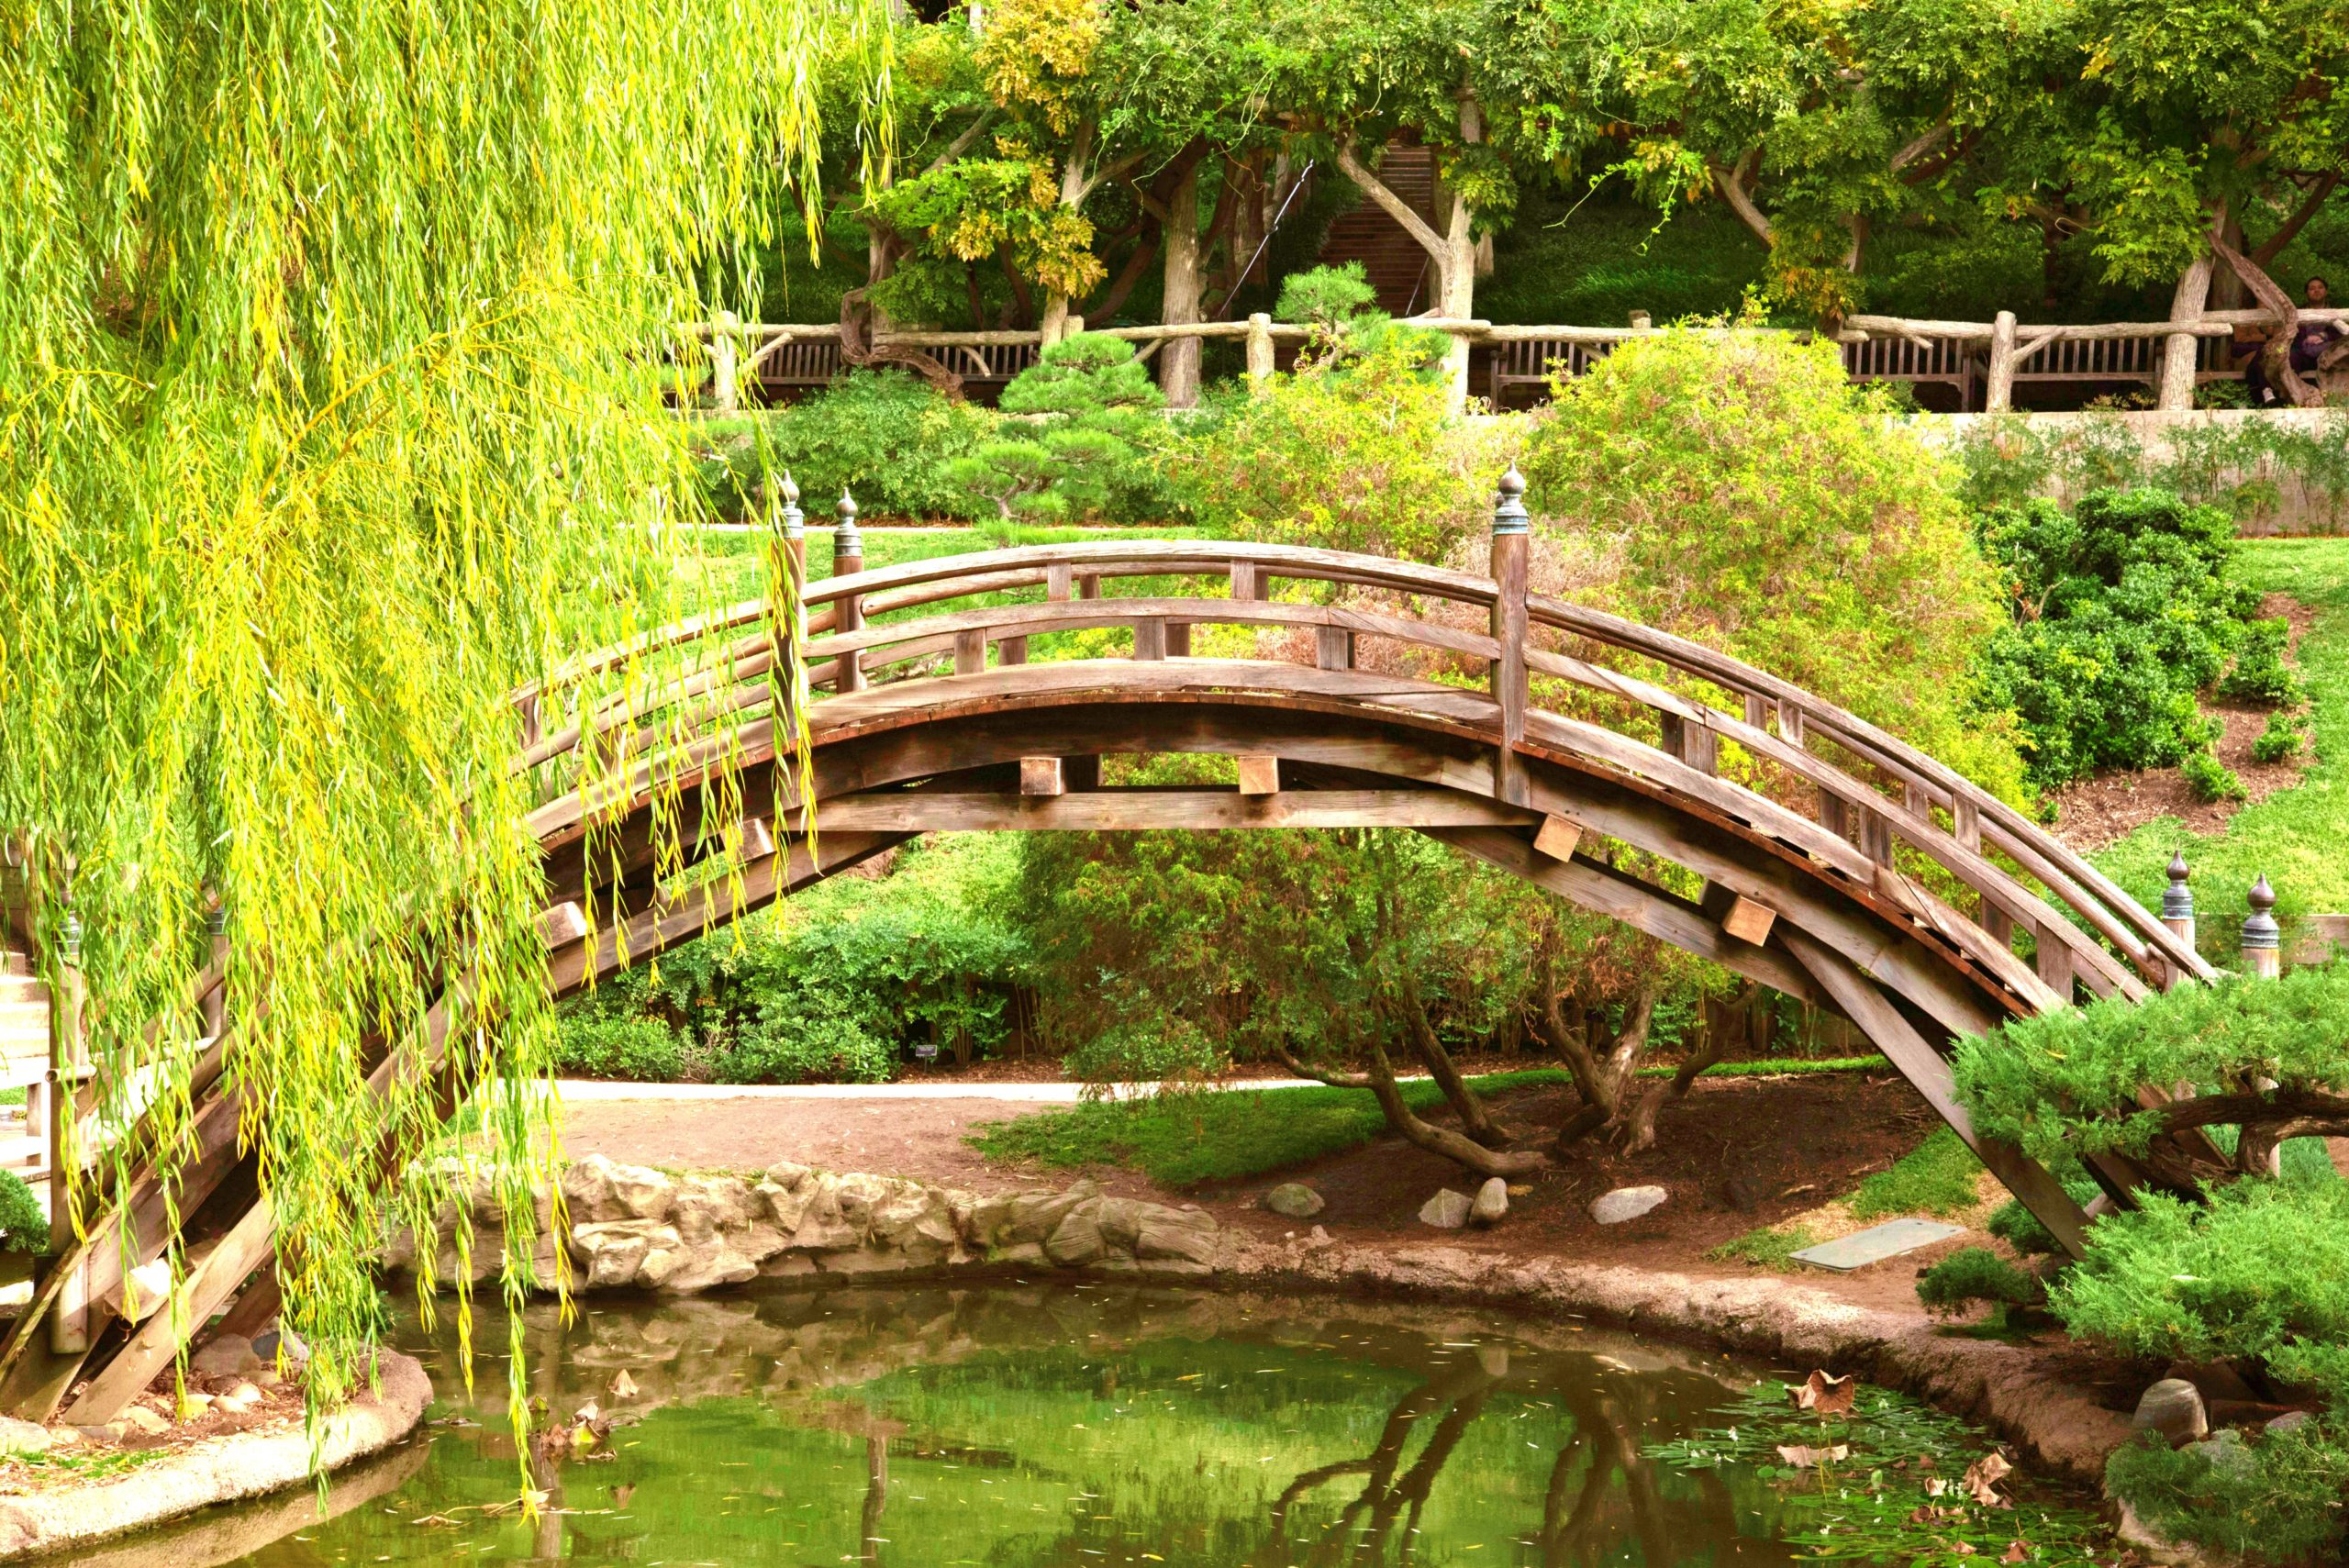 <img src="ana.jpg" alt="ana bridge at huntingdon gardens"/> 